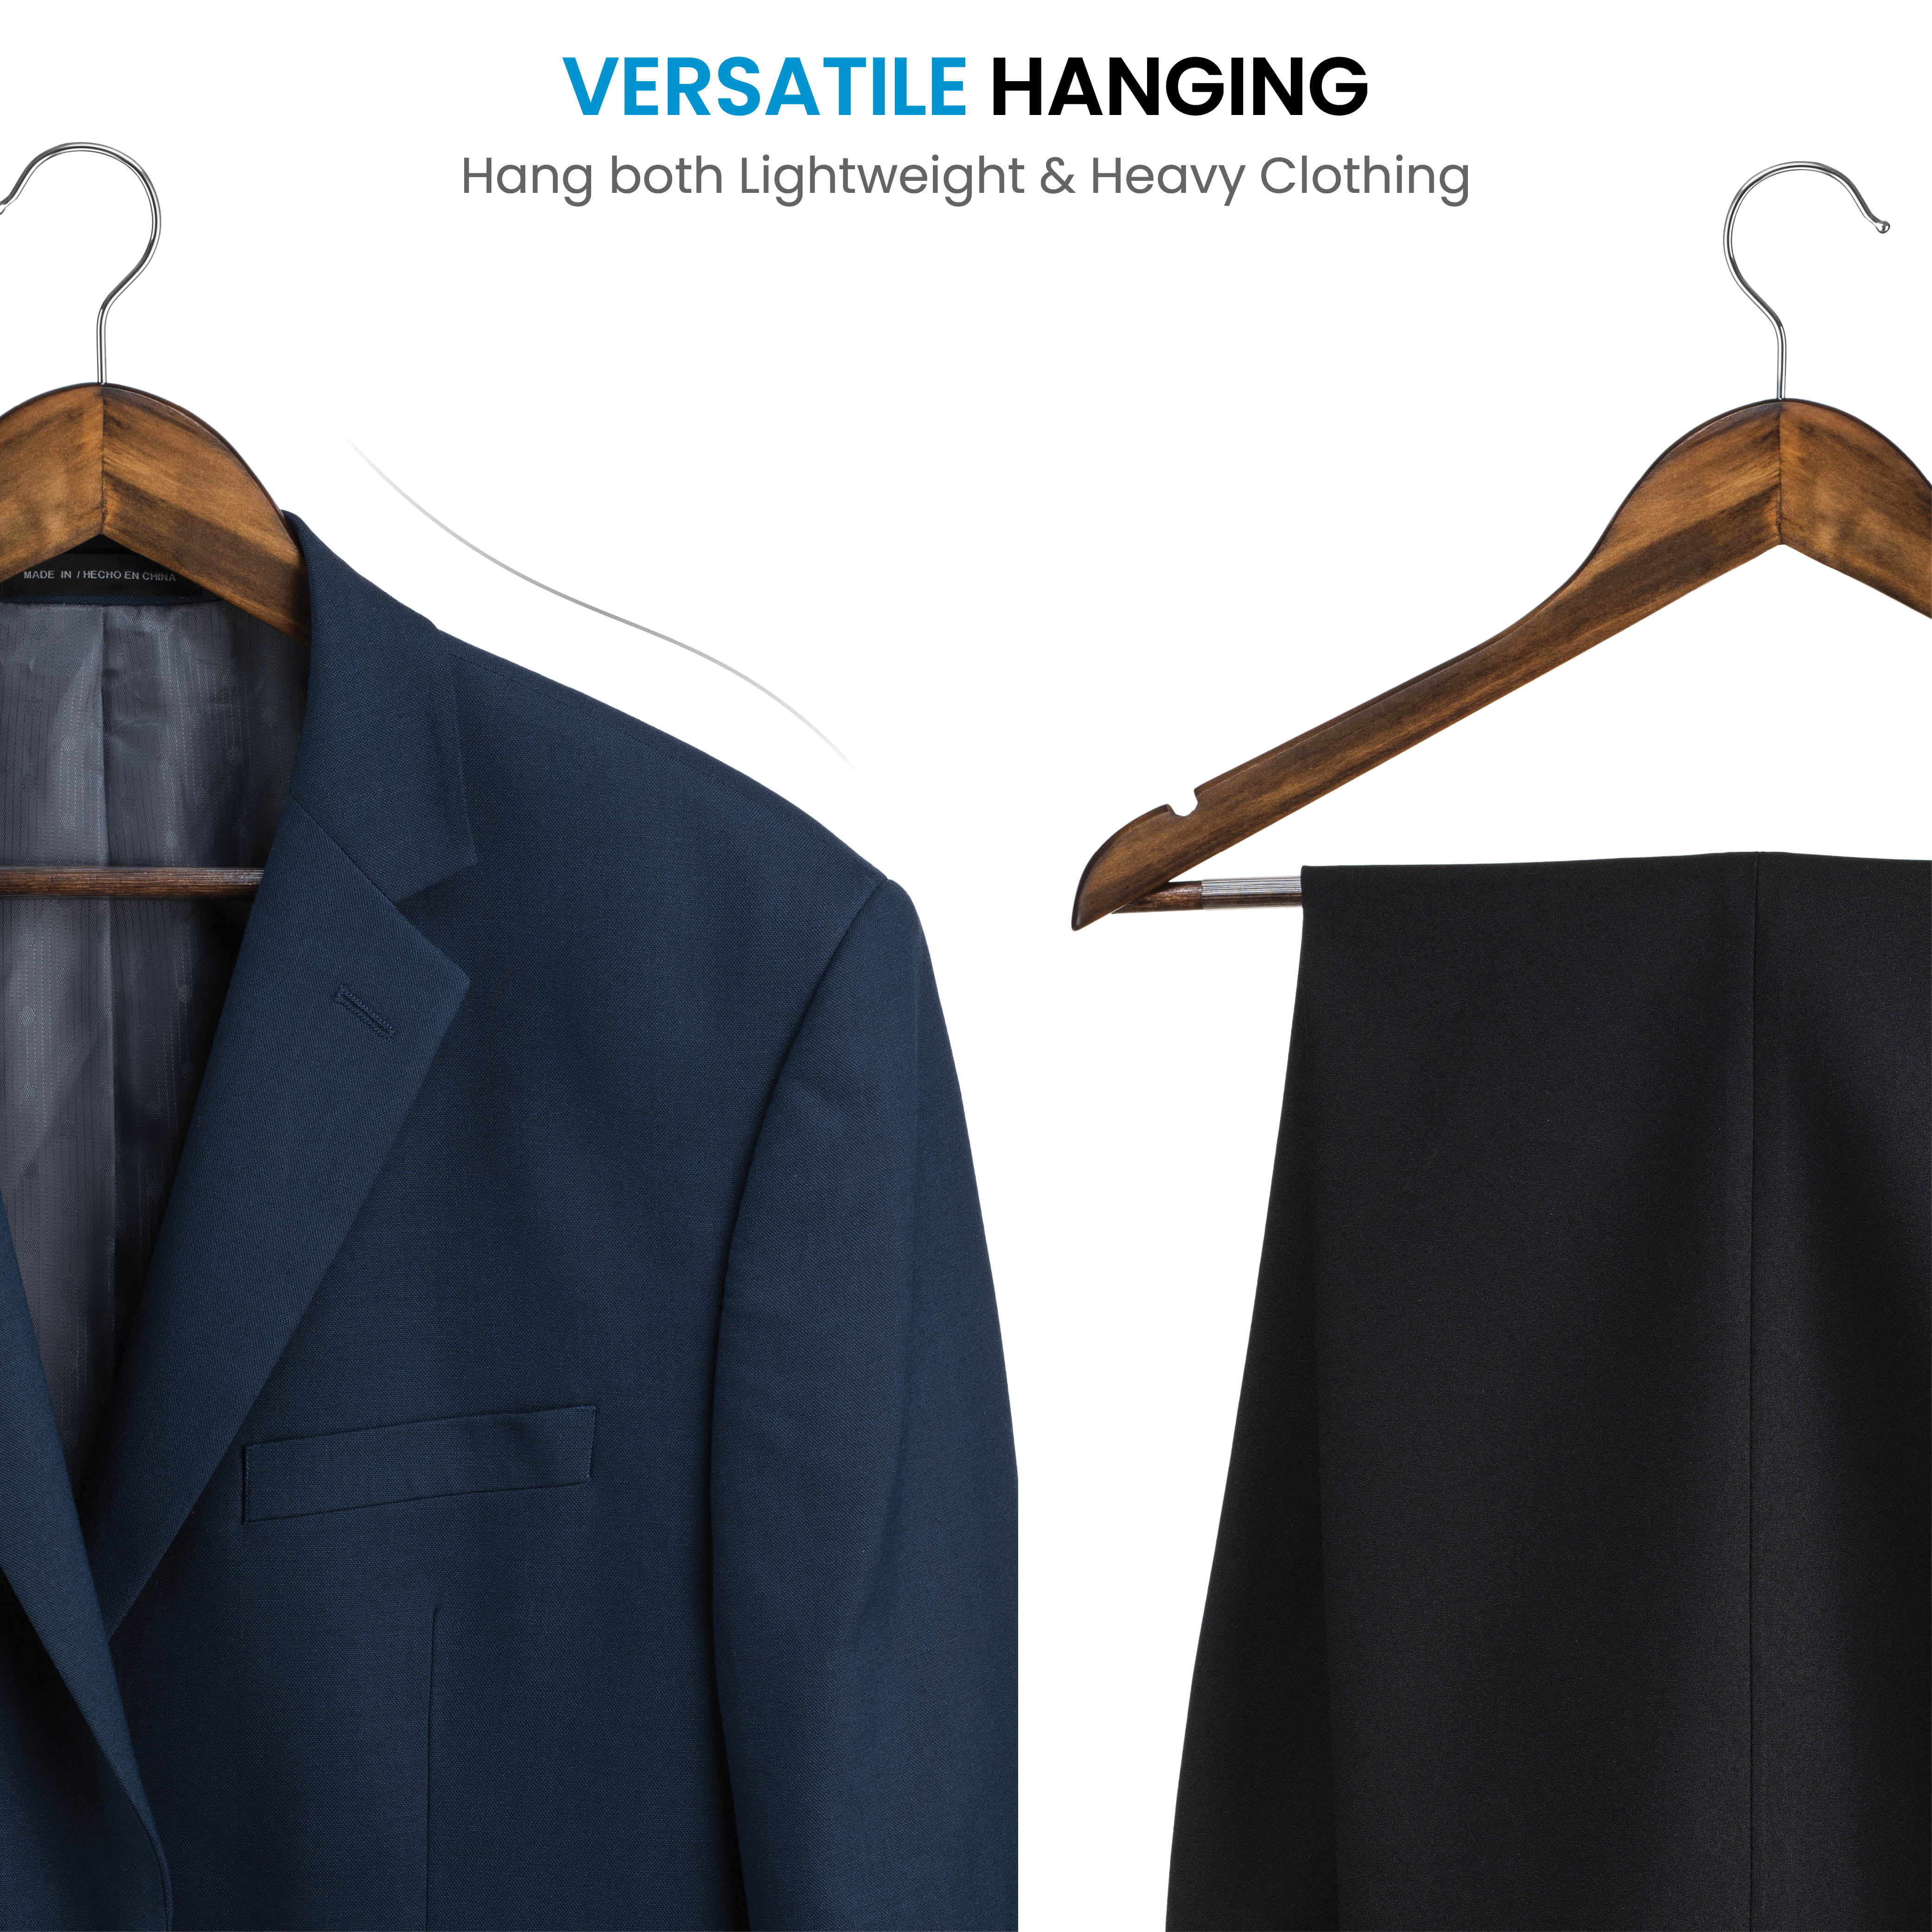 Rebrilliant Wooden Suit Hanger with Solid Wood Bar (Set of 100), Silver